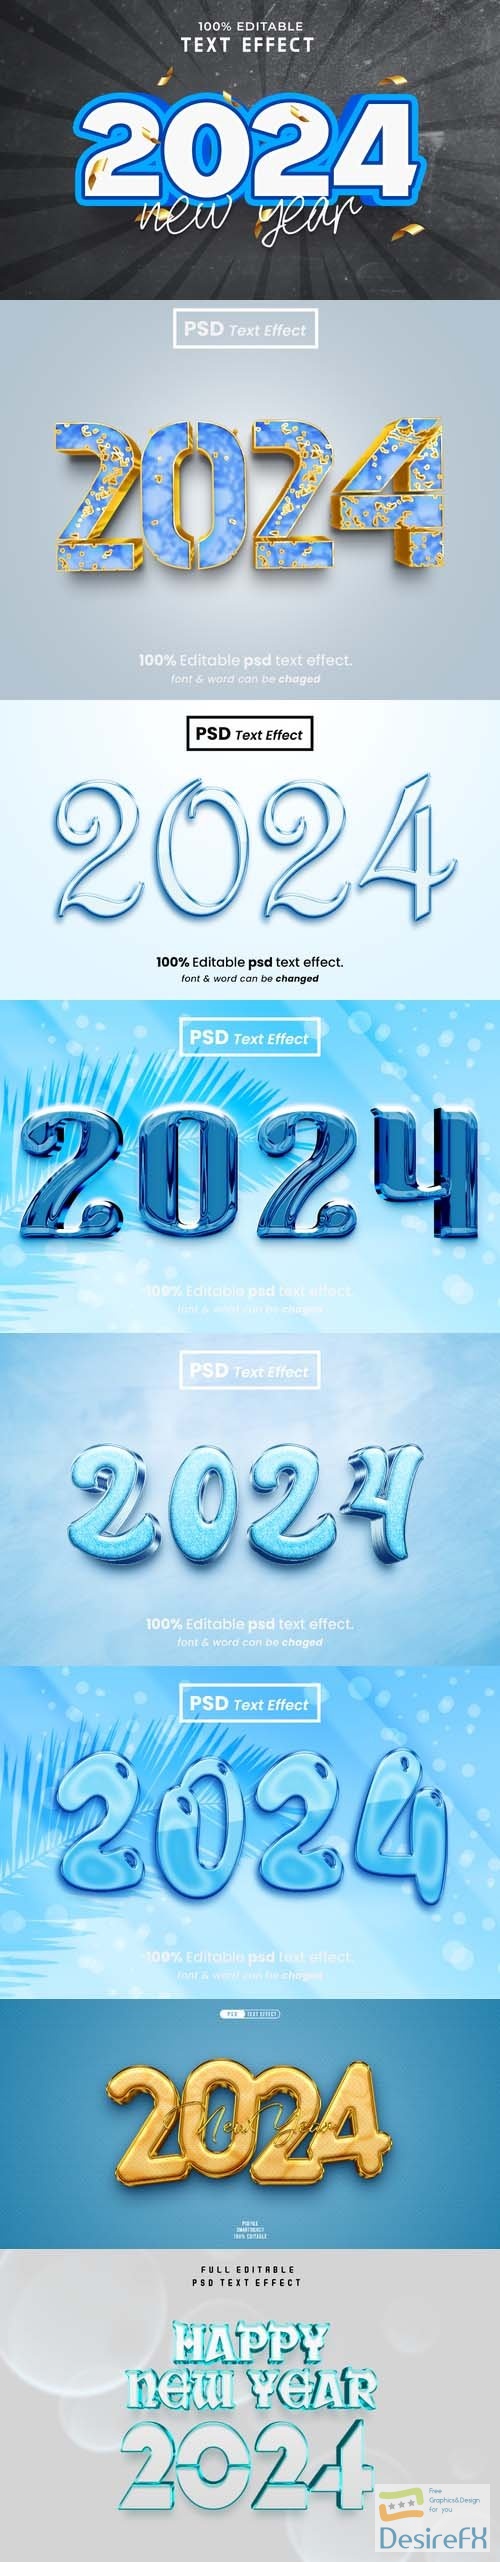 PSD new year 2024 3d editable text effect vol 1